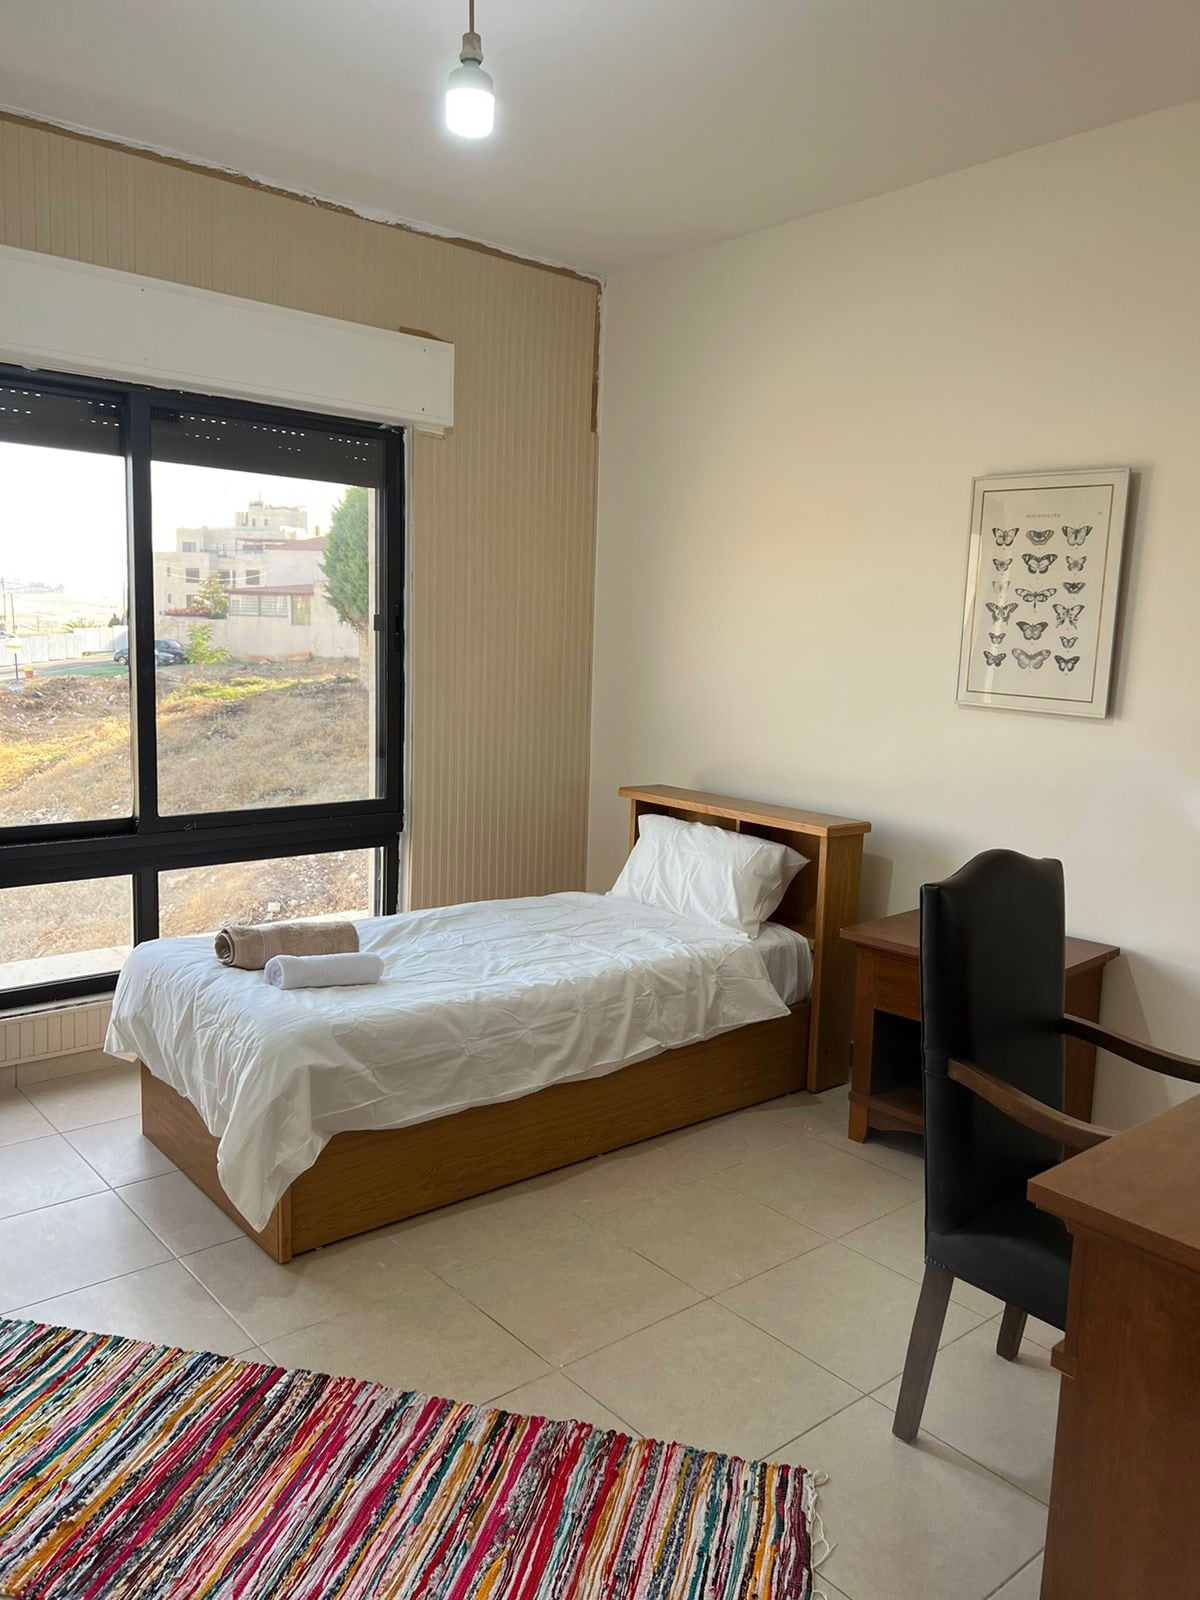 Two to Three Luxury bedroom apt in Abdoun